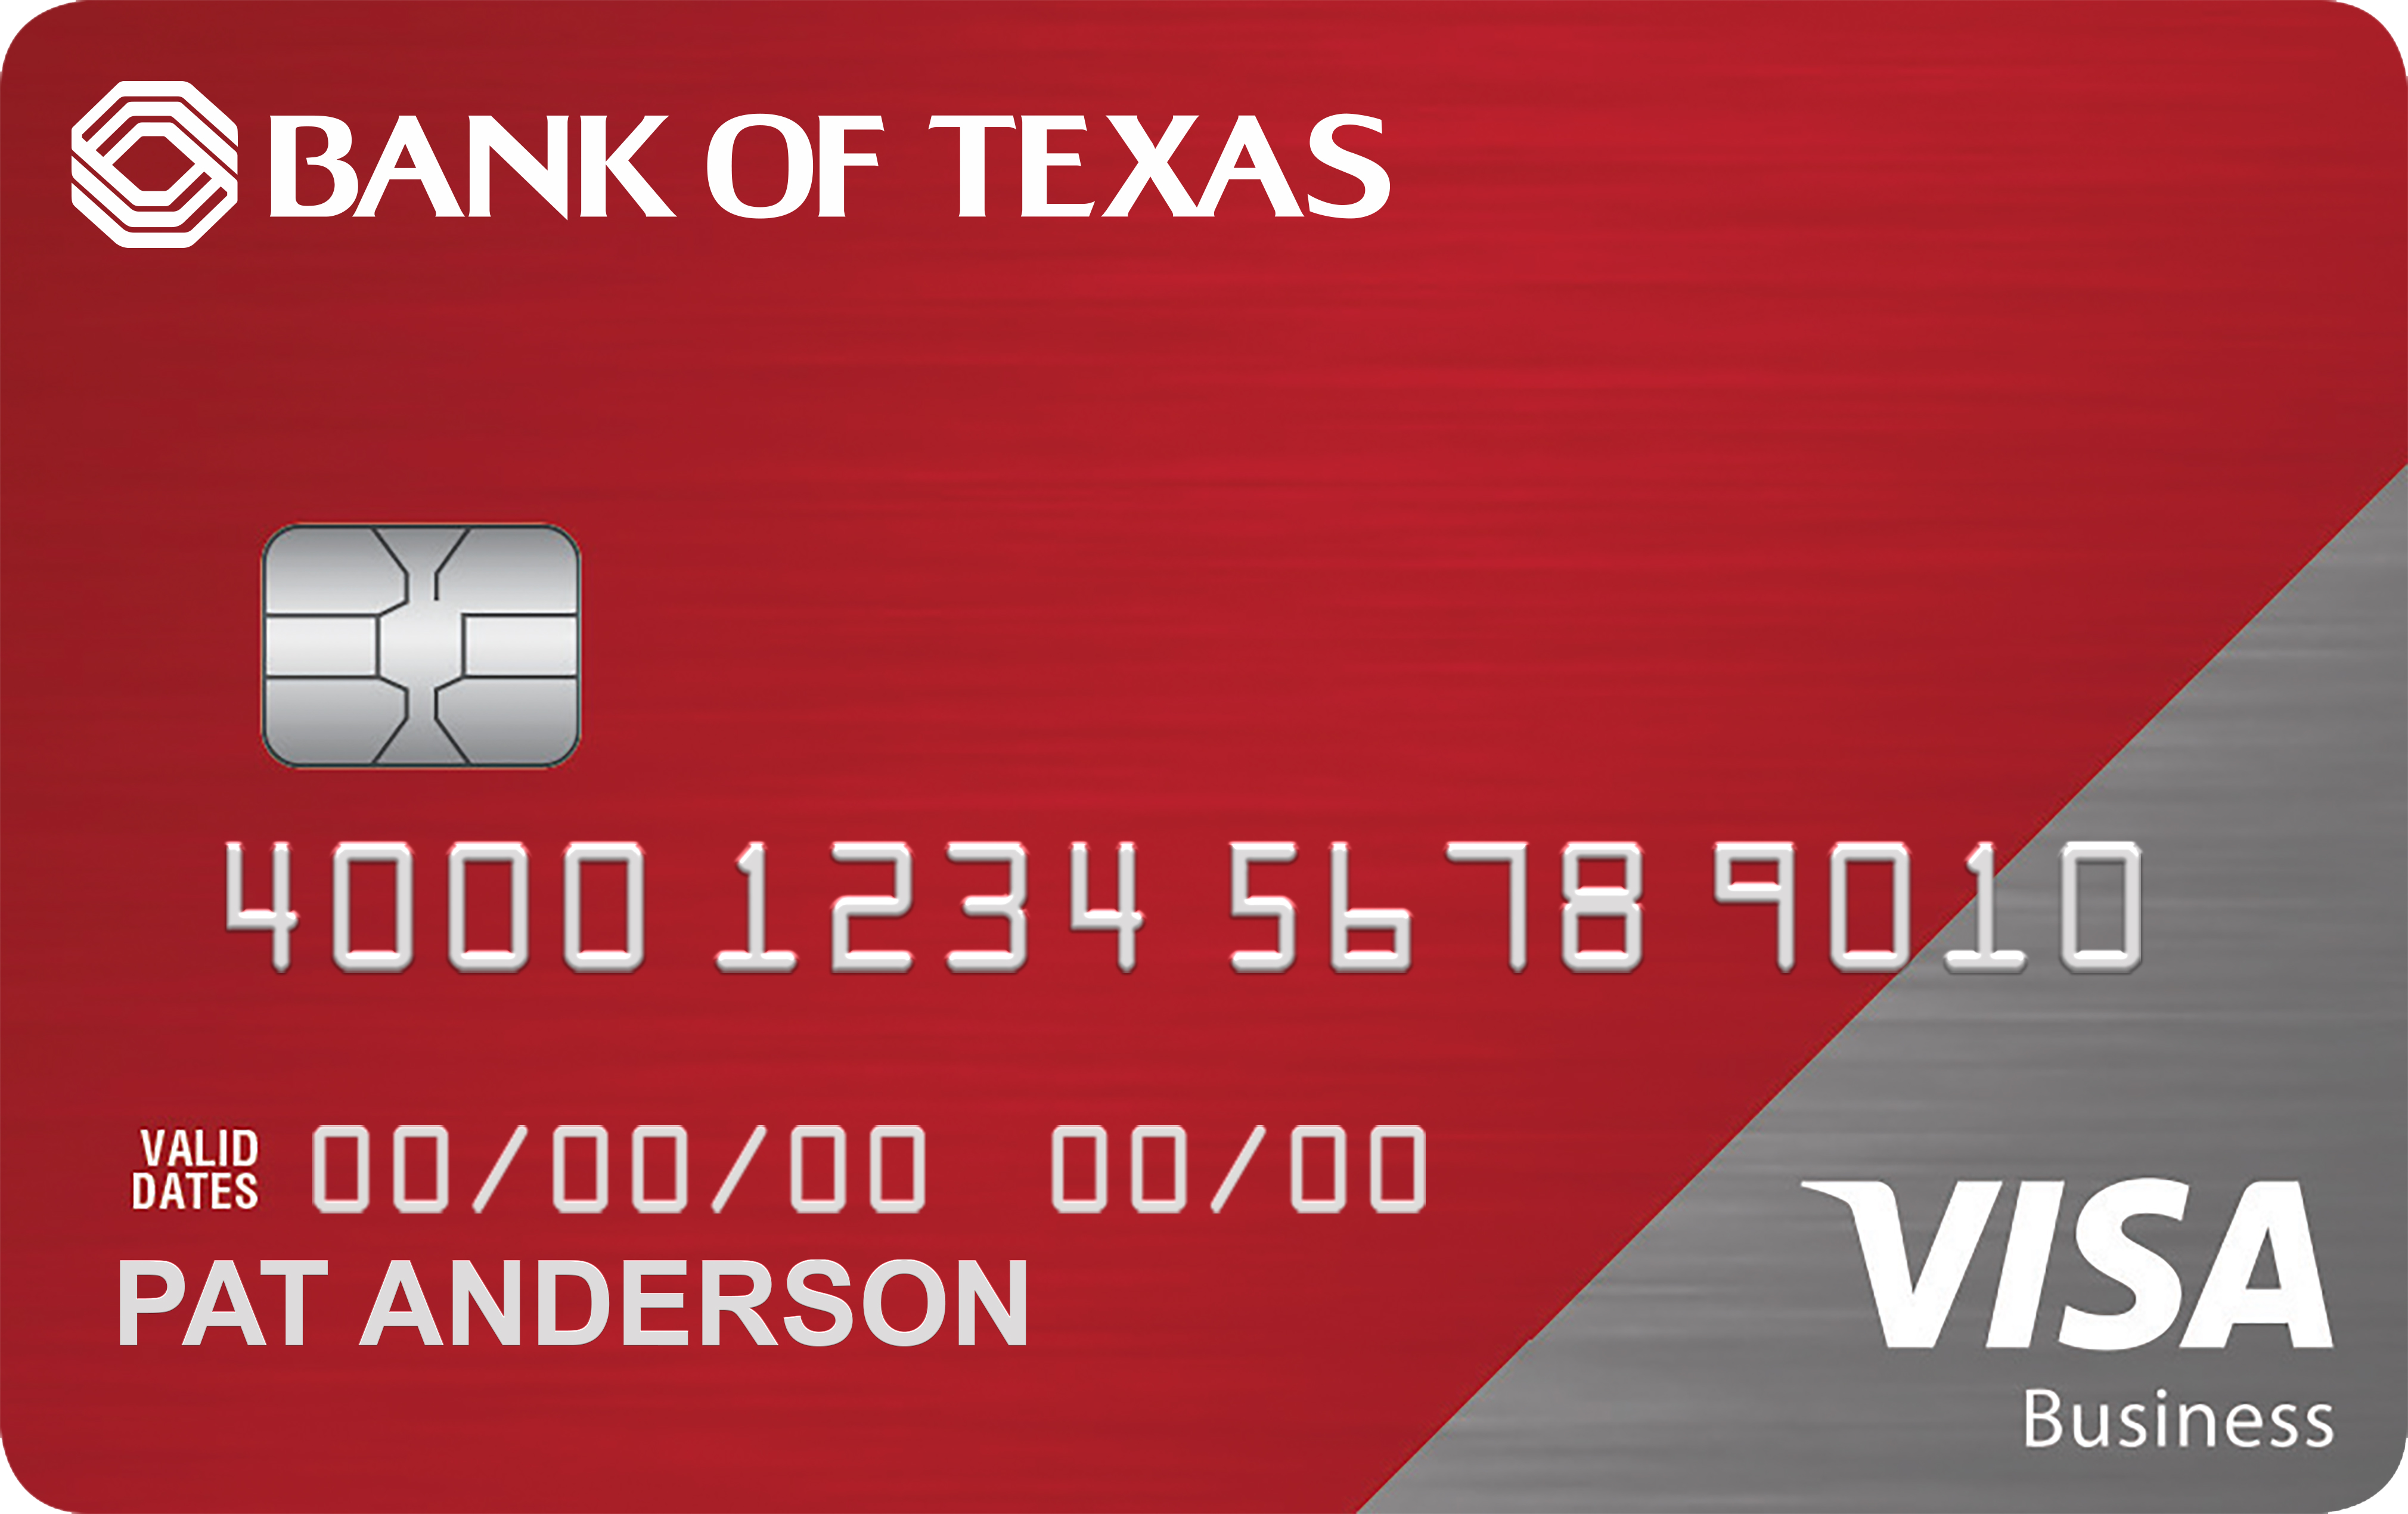 Bank of Texas Smart Business Rewards Card